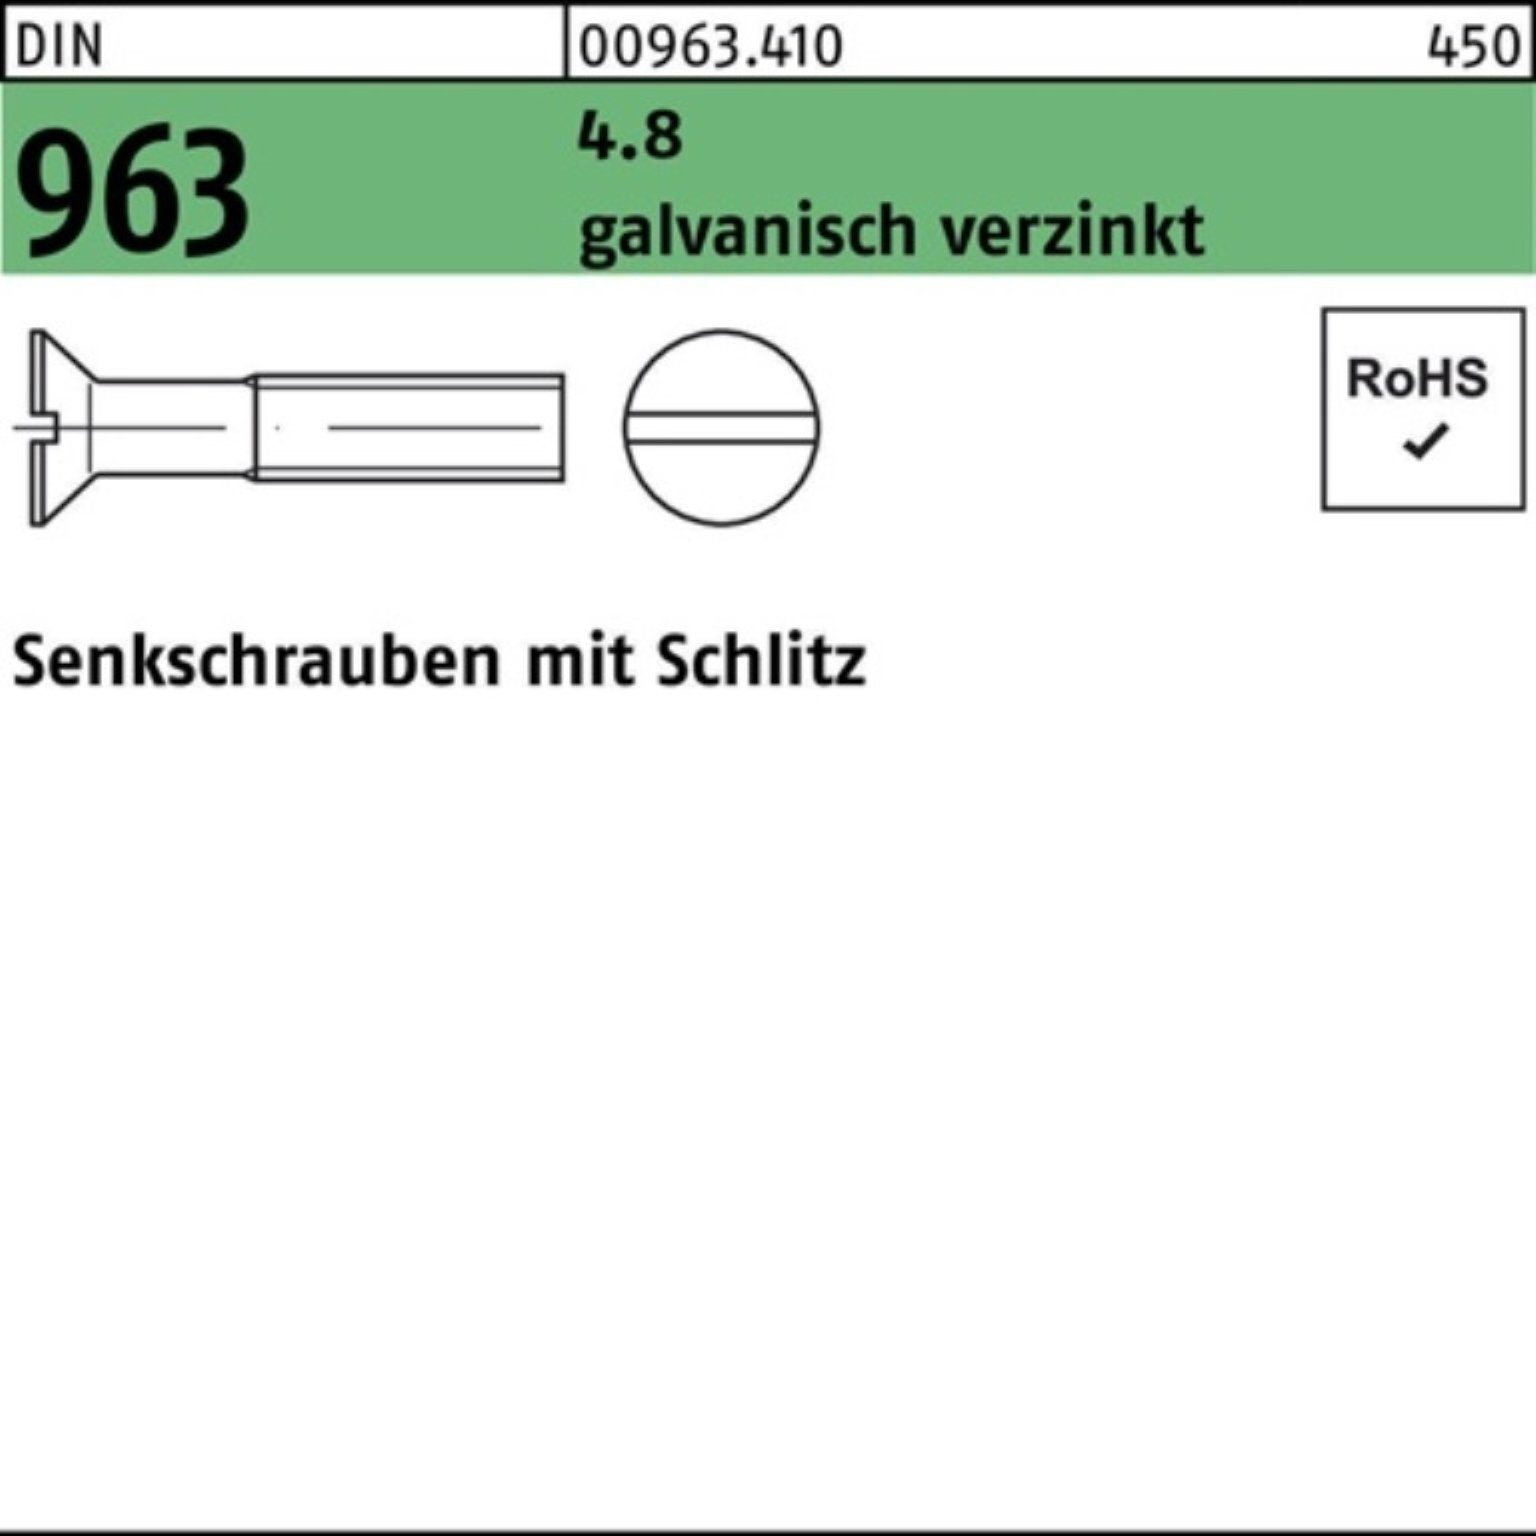 Reyher Senkschraube 200er Pack Senkschraube DIN 963 Schlitz M5x 18 4.8 galv.verz. 200 Stü